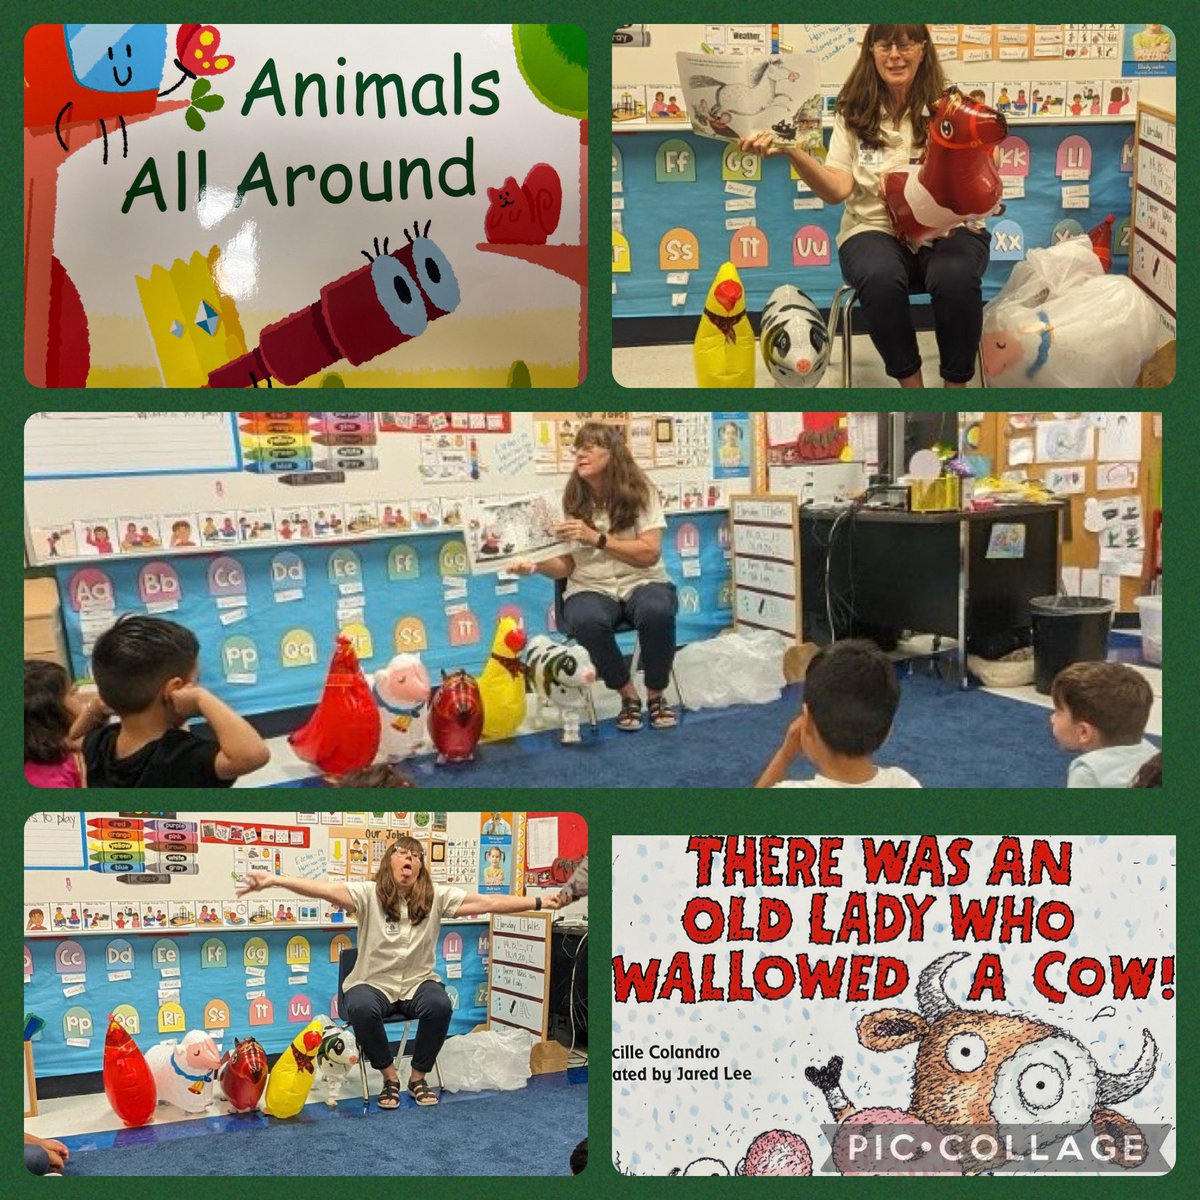 When your animal unit begins, you bring the animals to your read aloud! @NISDFisher @NISD_ECE @quintero_rhaps @NISD @nisdelemelar